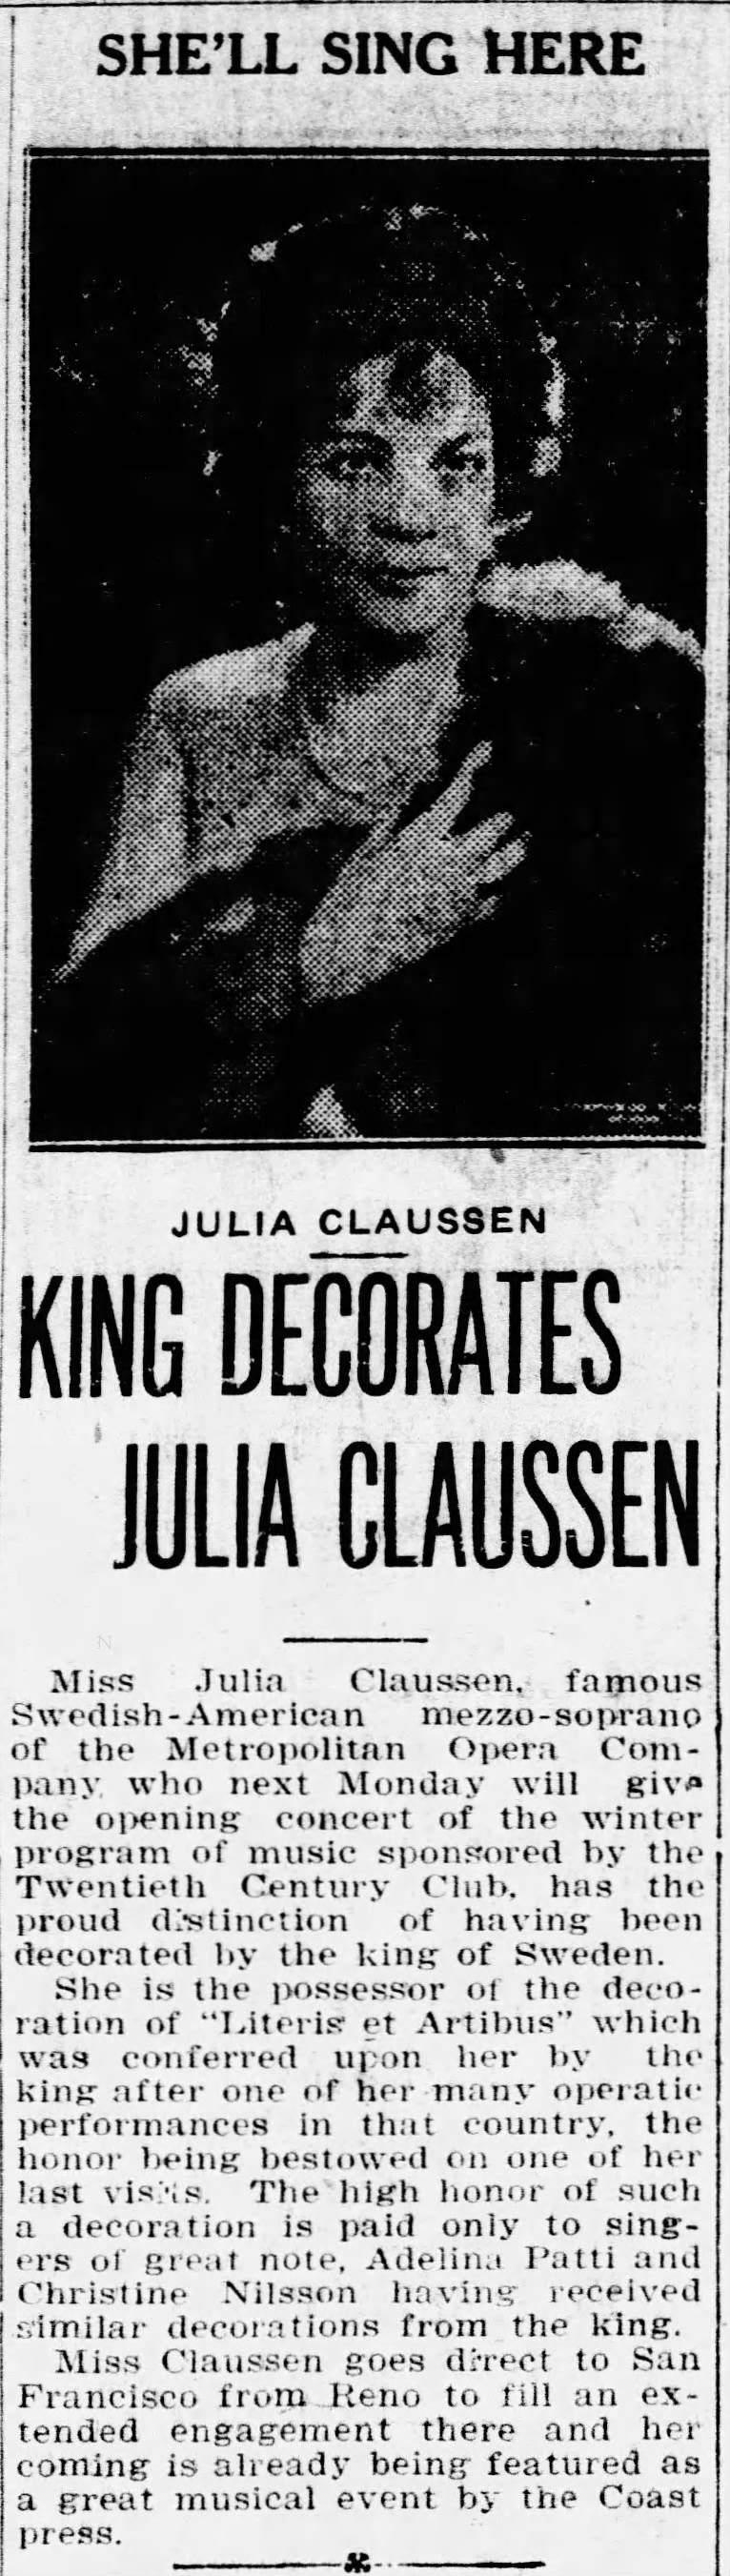 King Decorates Julia Claussen